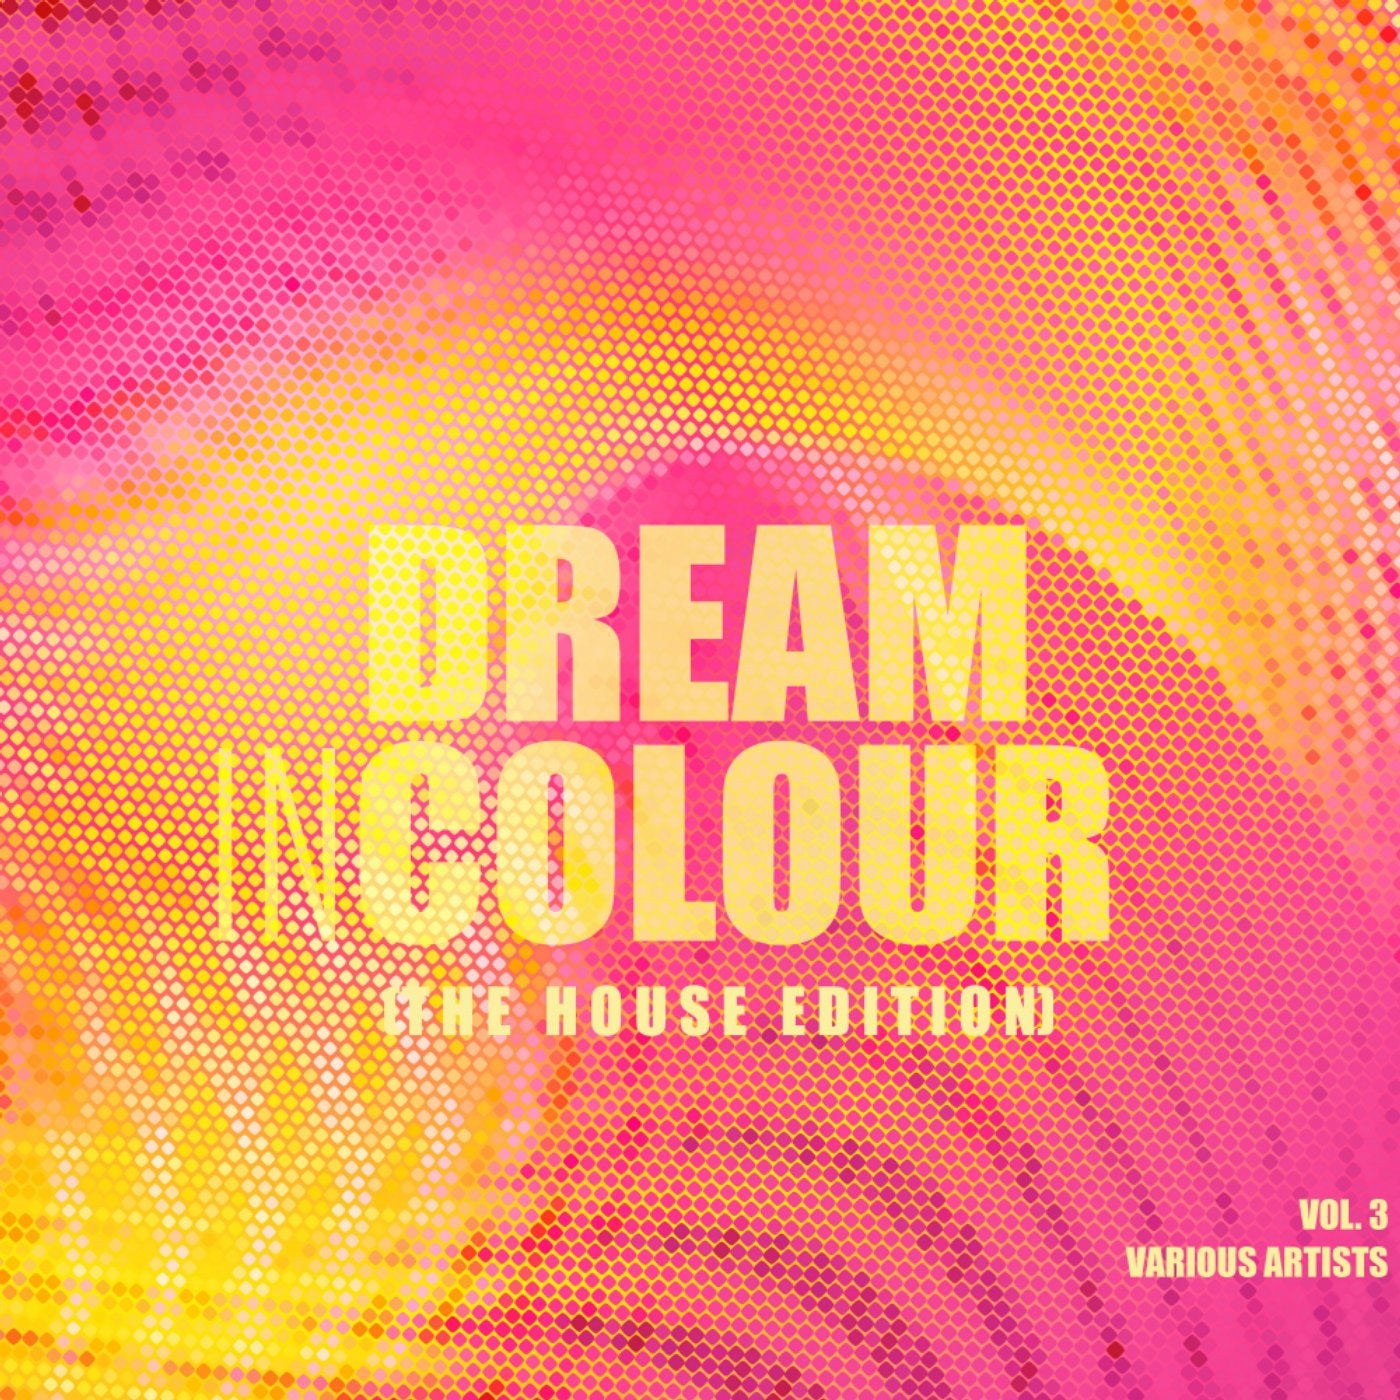 Dream In Colour, Vol. 3 (The House Edition)